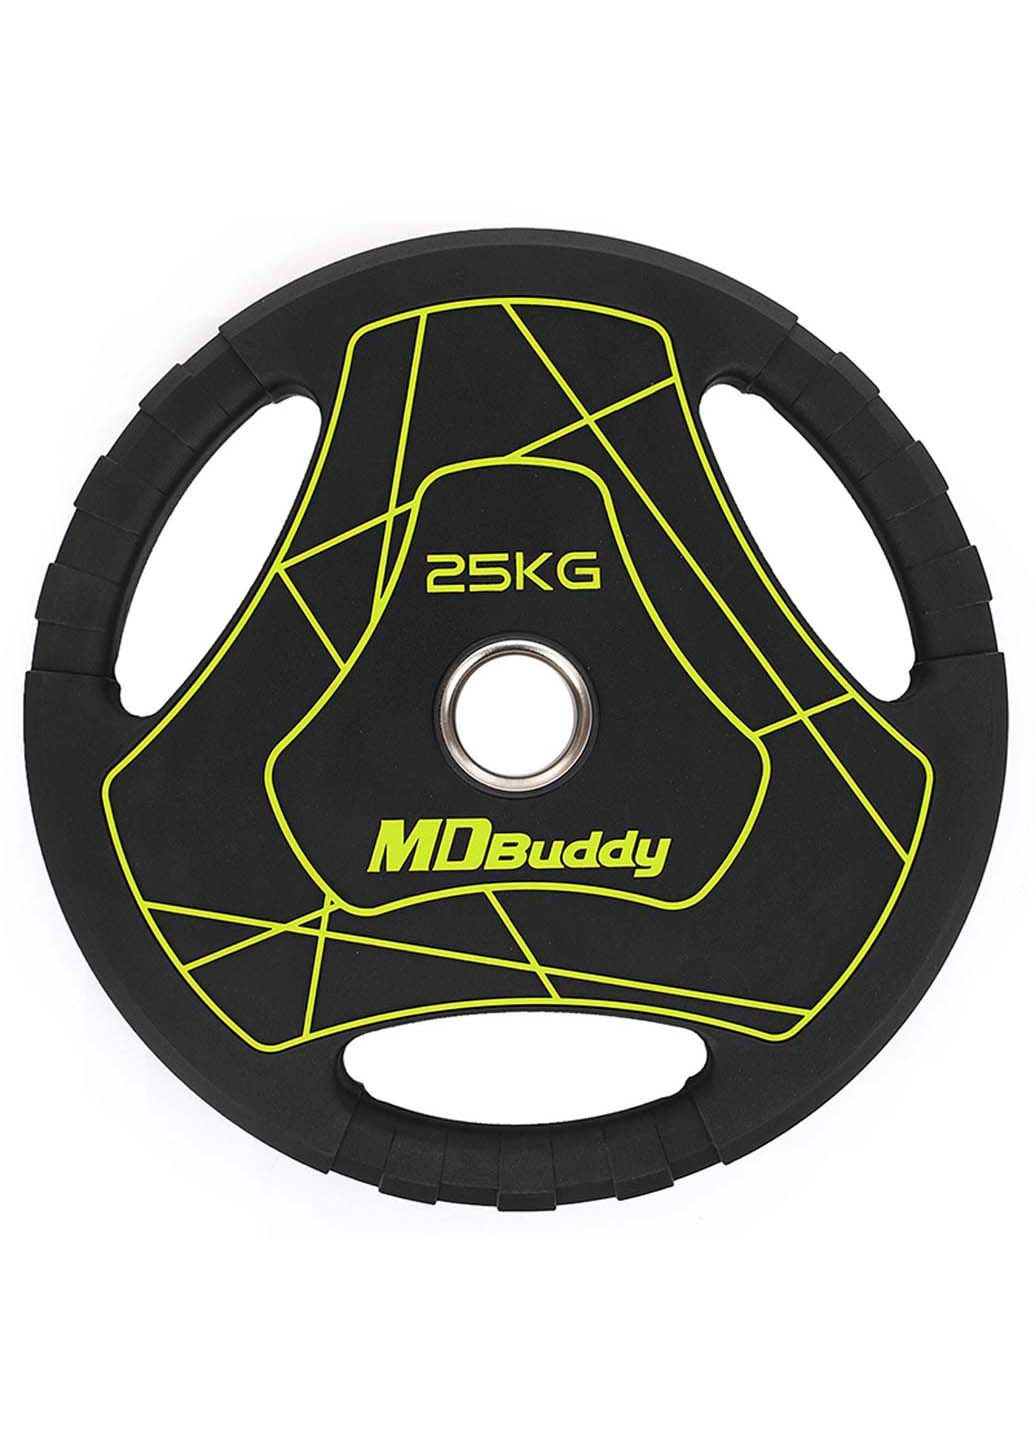 Блины диски TA-9647 25 кг MDbuddy (286043774)